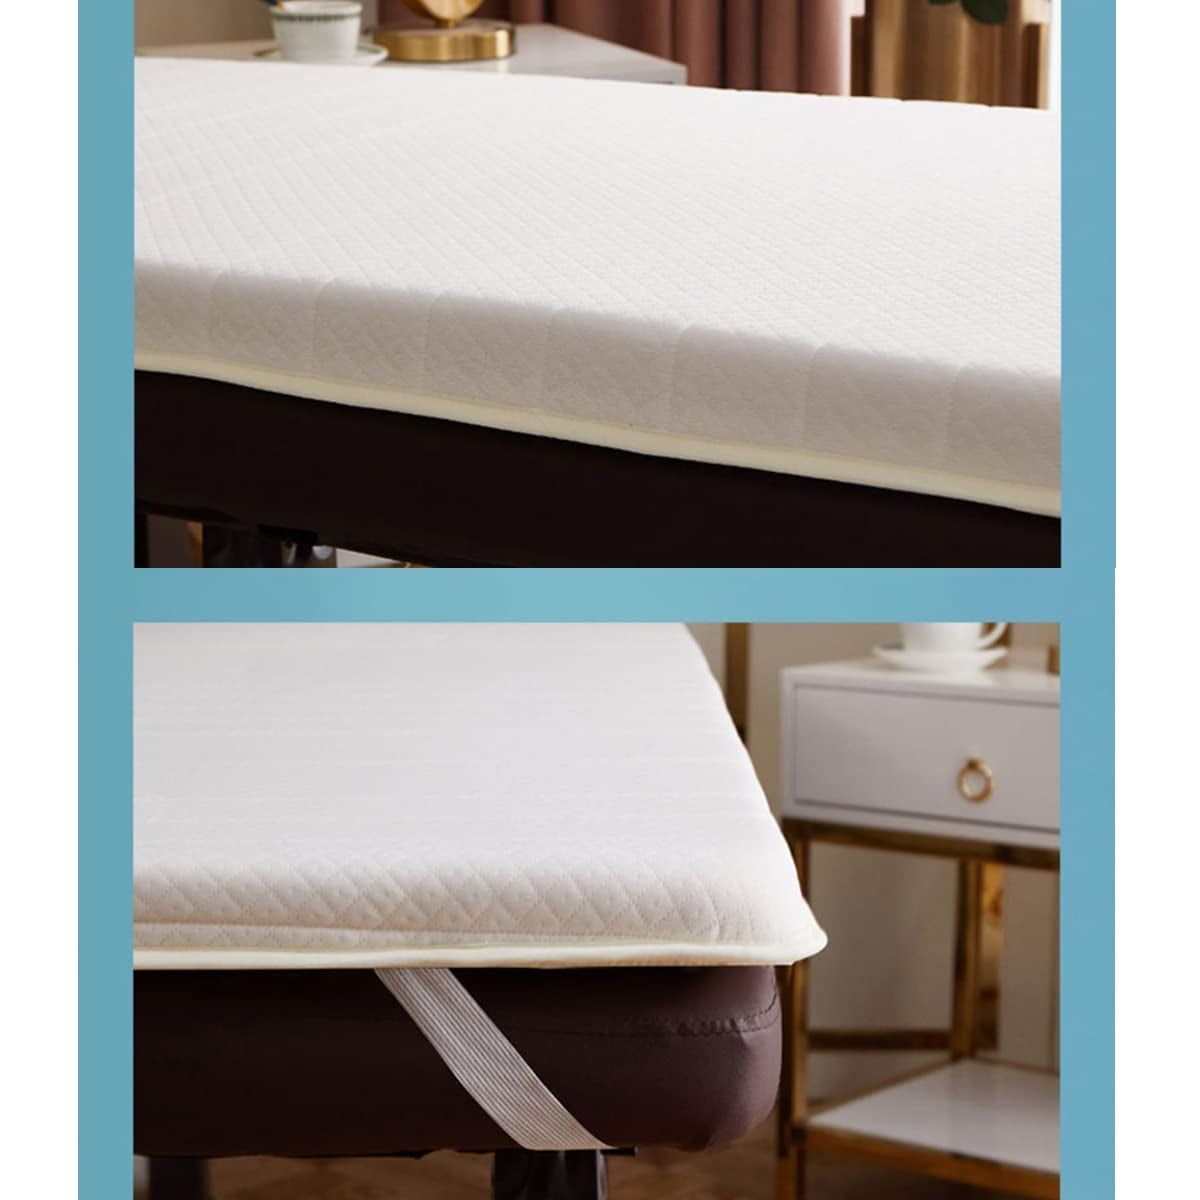  CRLED Non-Slip Memory Foam Mattress Topper for Massage